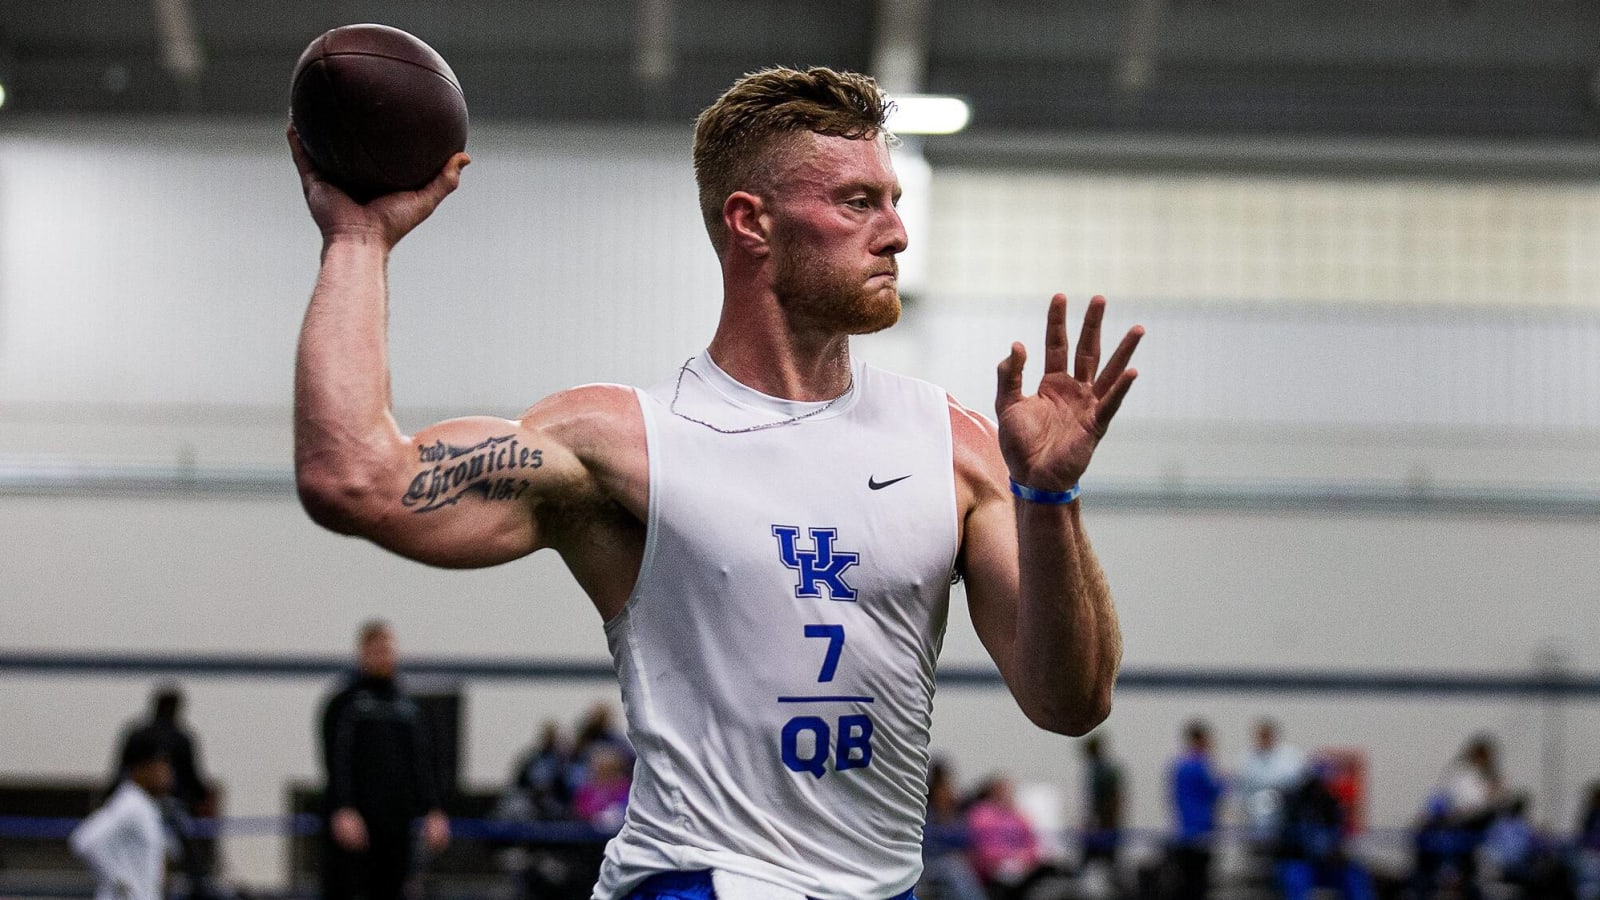 Draft Profile: Will Levis, QB, Kentucky